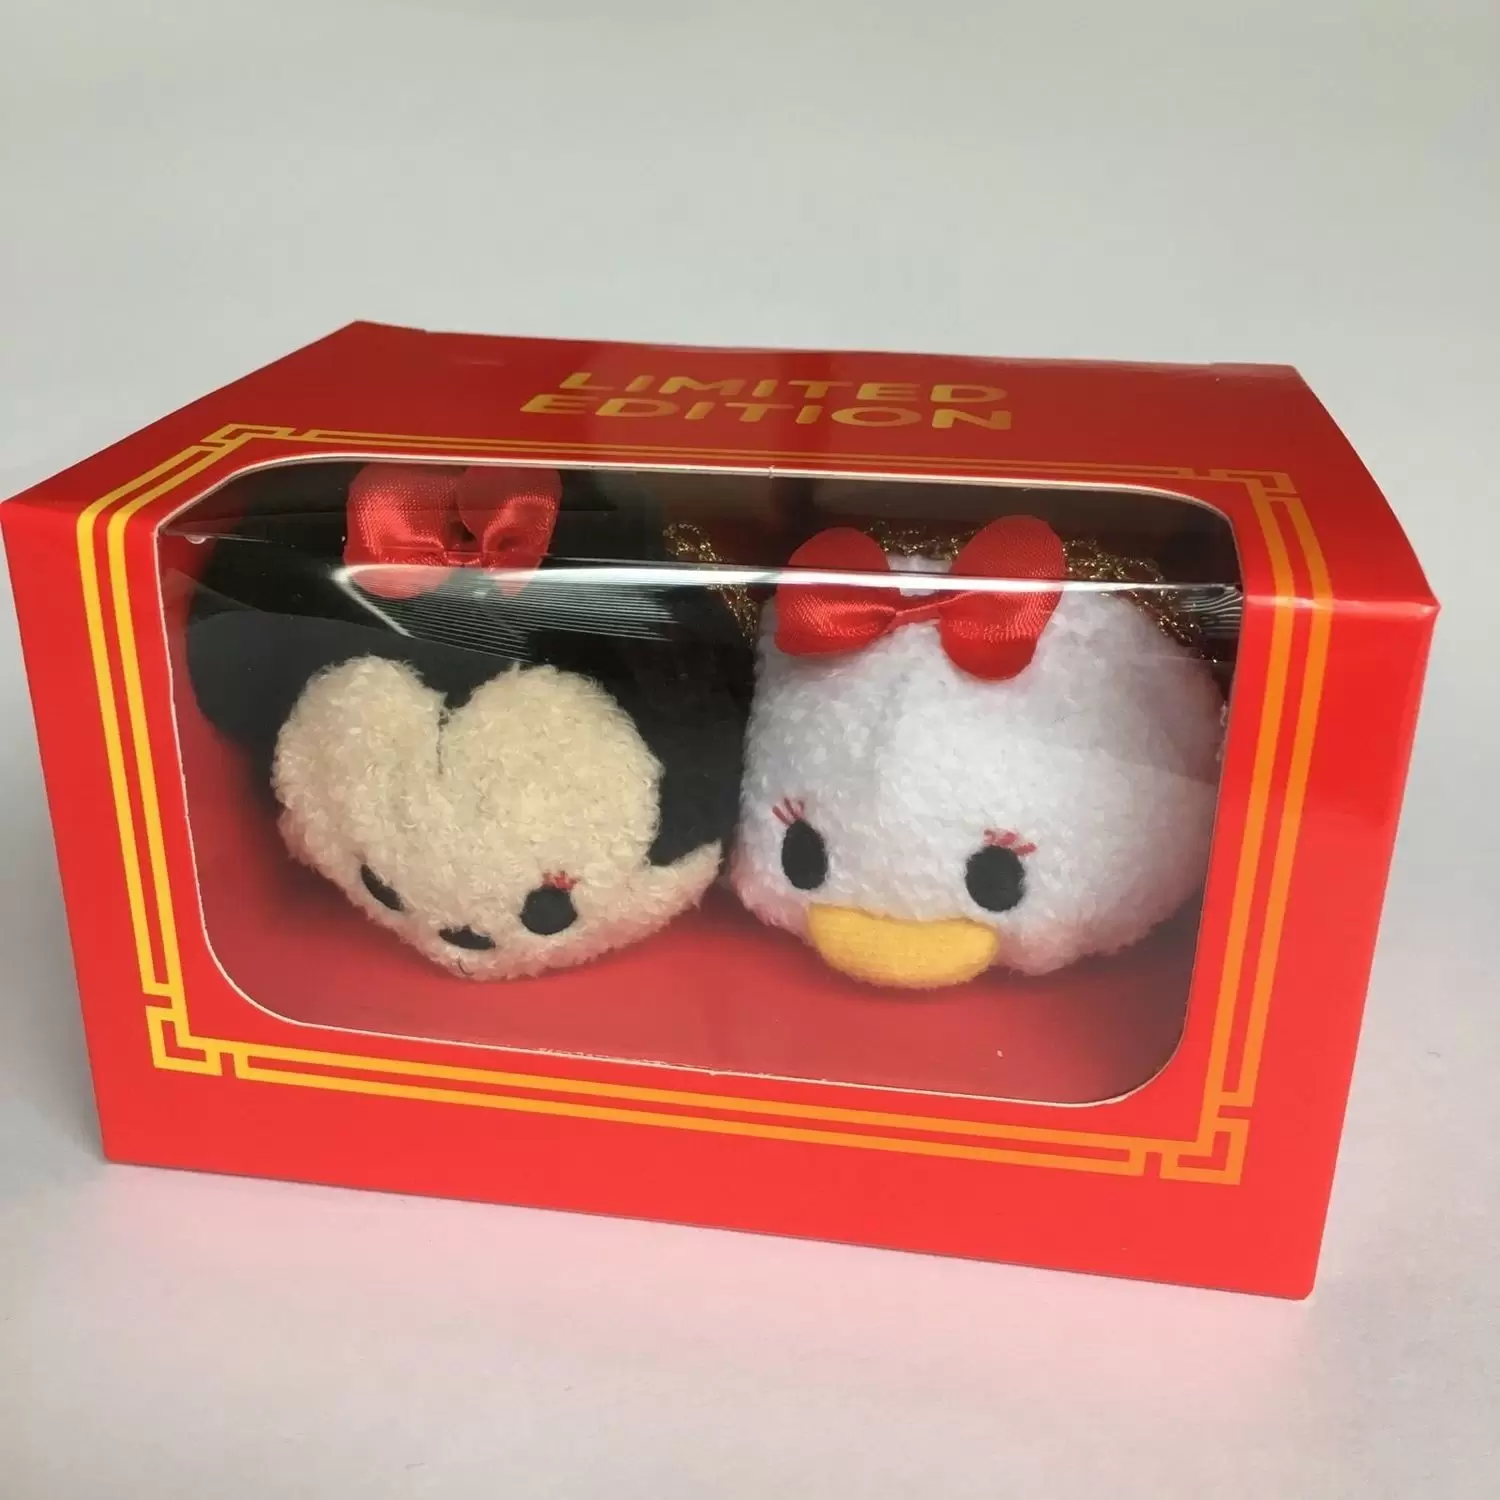 Tsum Tsum Bag And Set - Shanghai 1st Anniversary Red Box Set